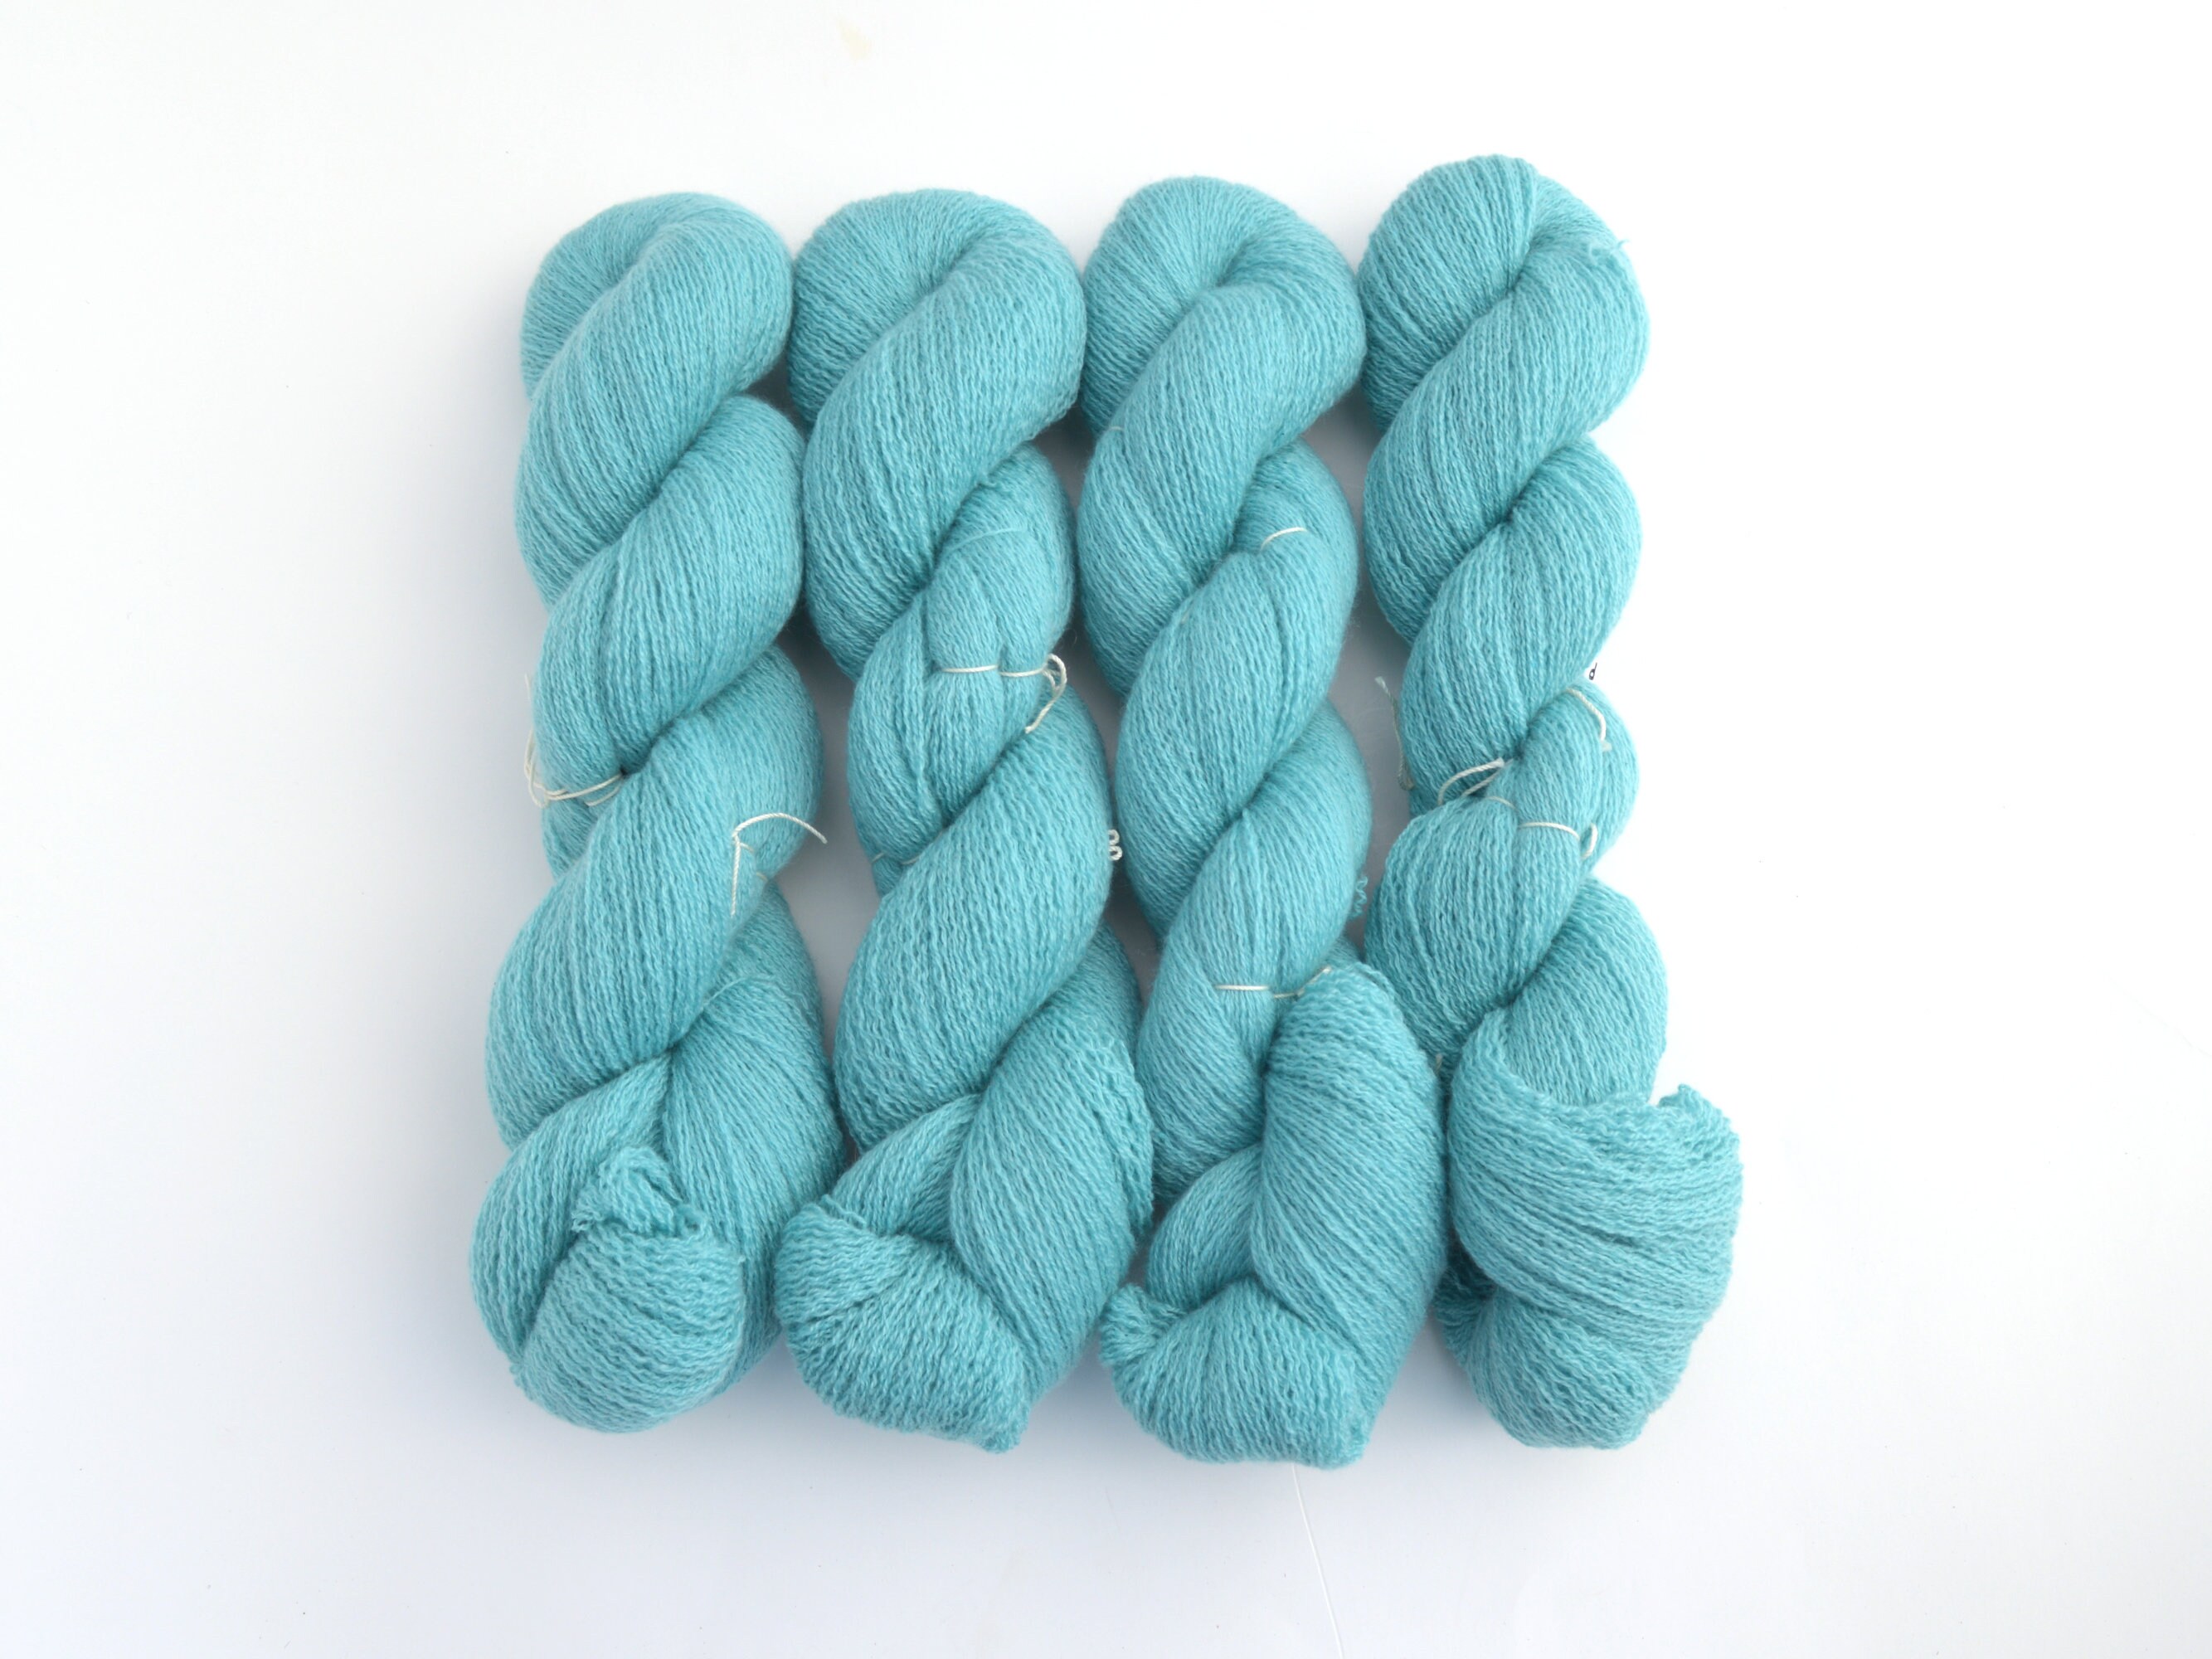 Aqua Blue Wool Roving for Needle Felting, Wet Felting, Spinning, Dyed  Felting Wool, Turquoise, Light Teal, Robins Egg, Fiber Art Supplies